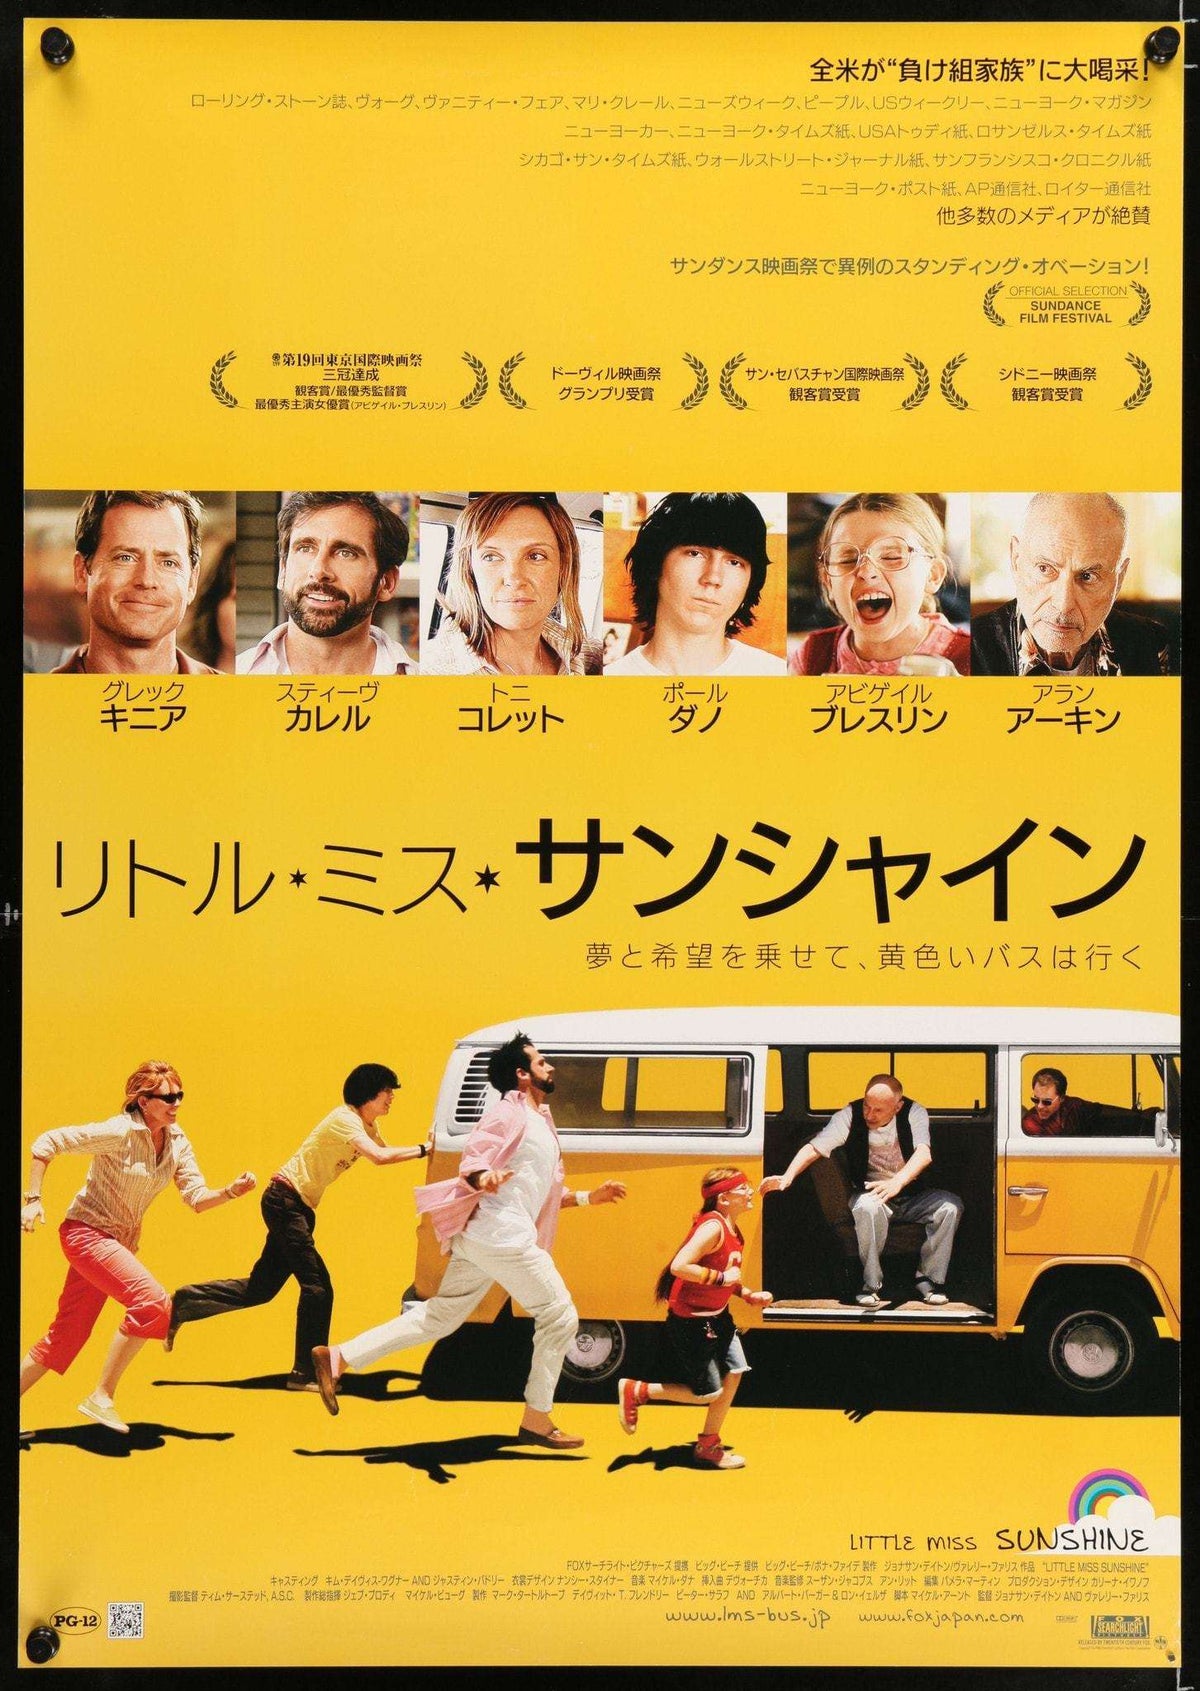 Little Miss Sunshine (2006) original movie poster for sale at Original Film Art